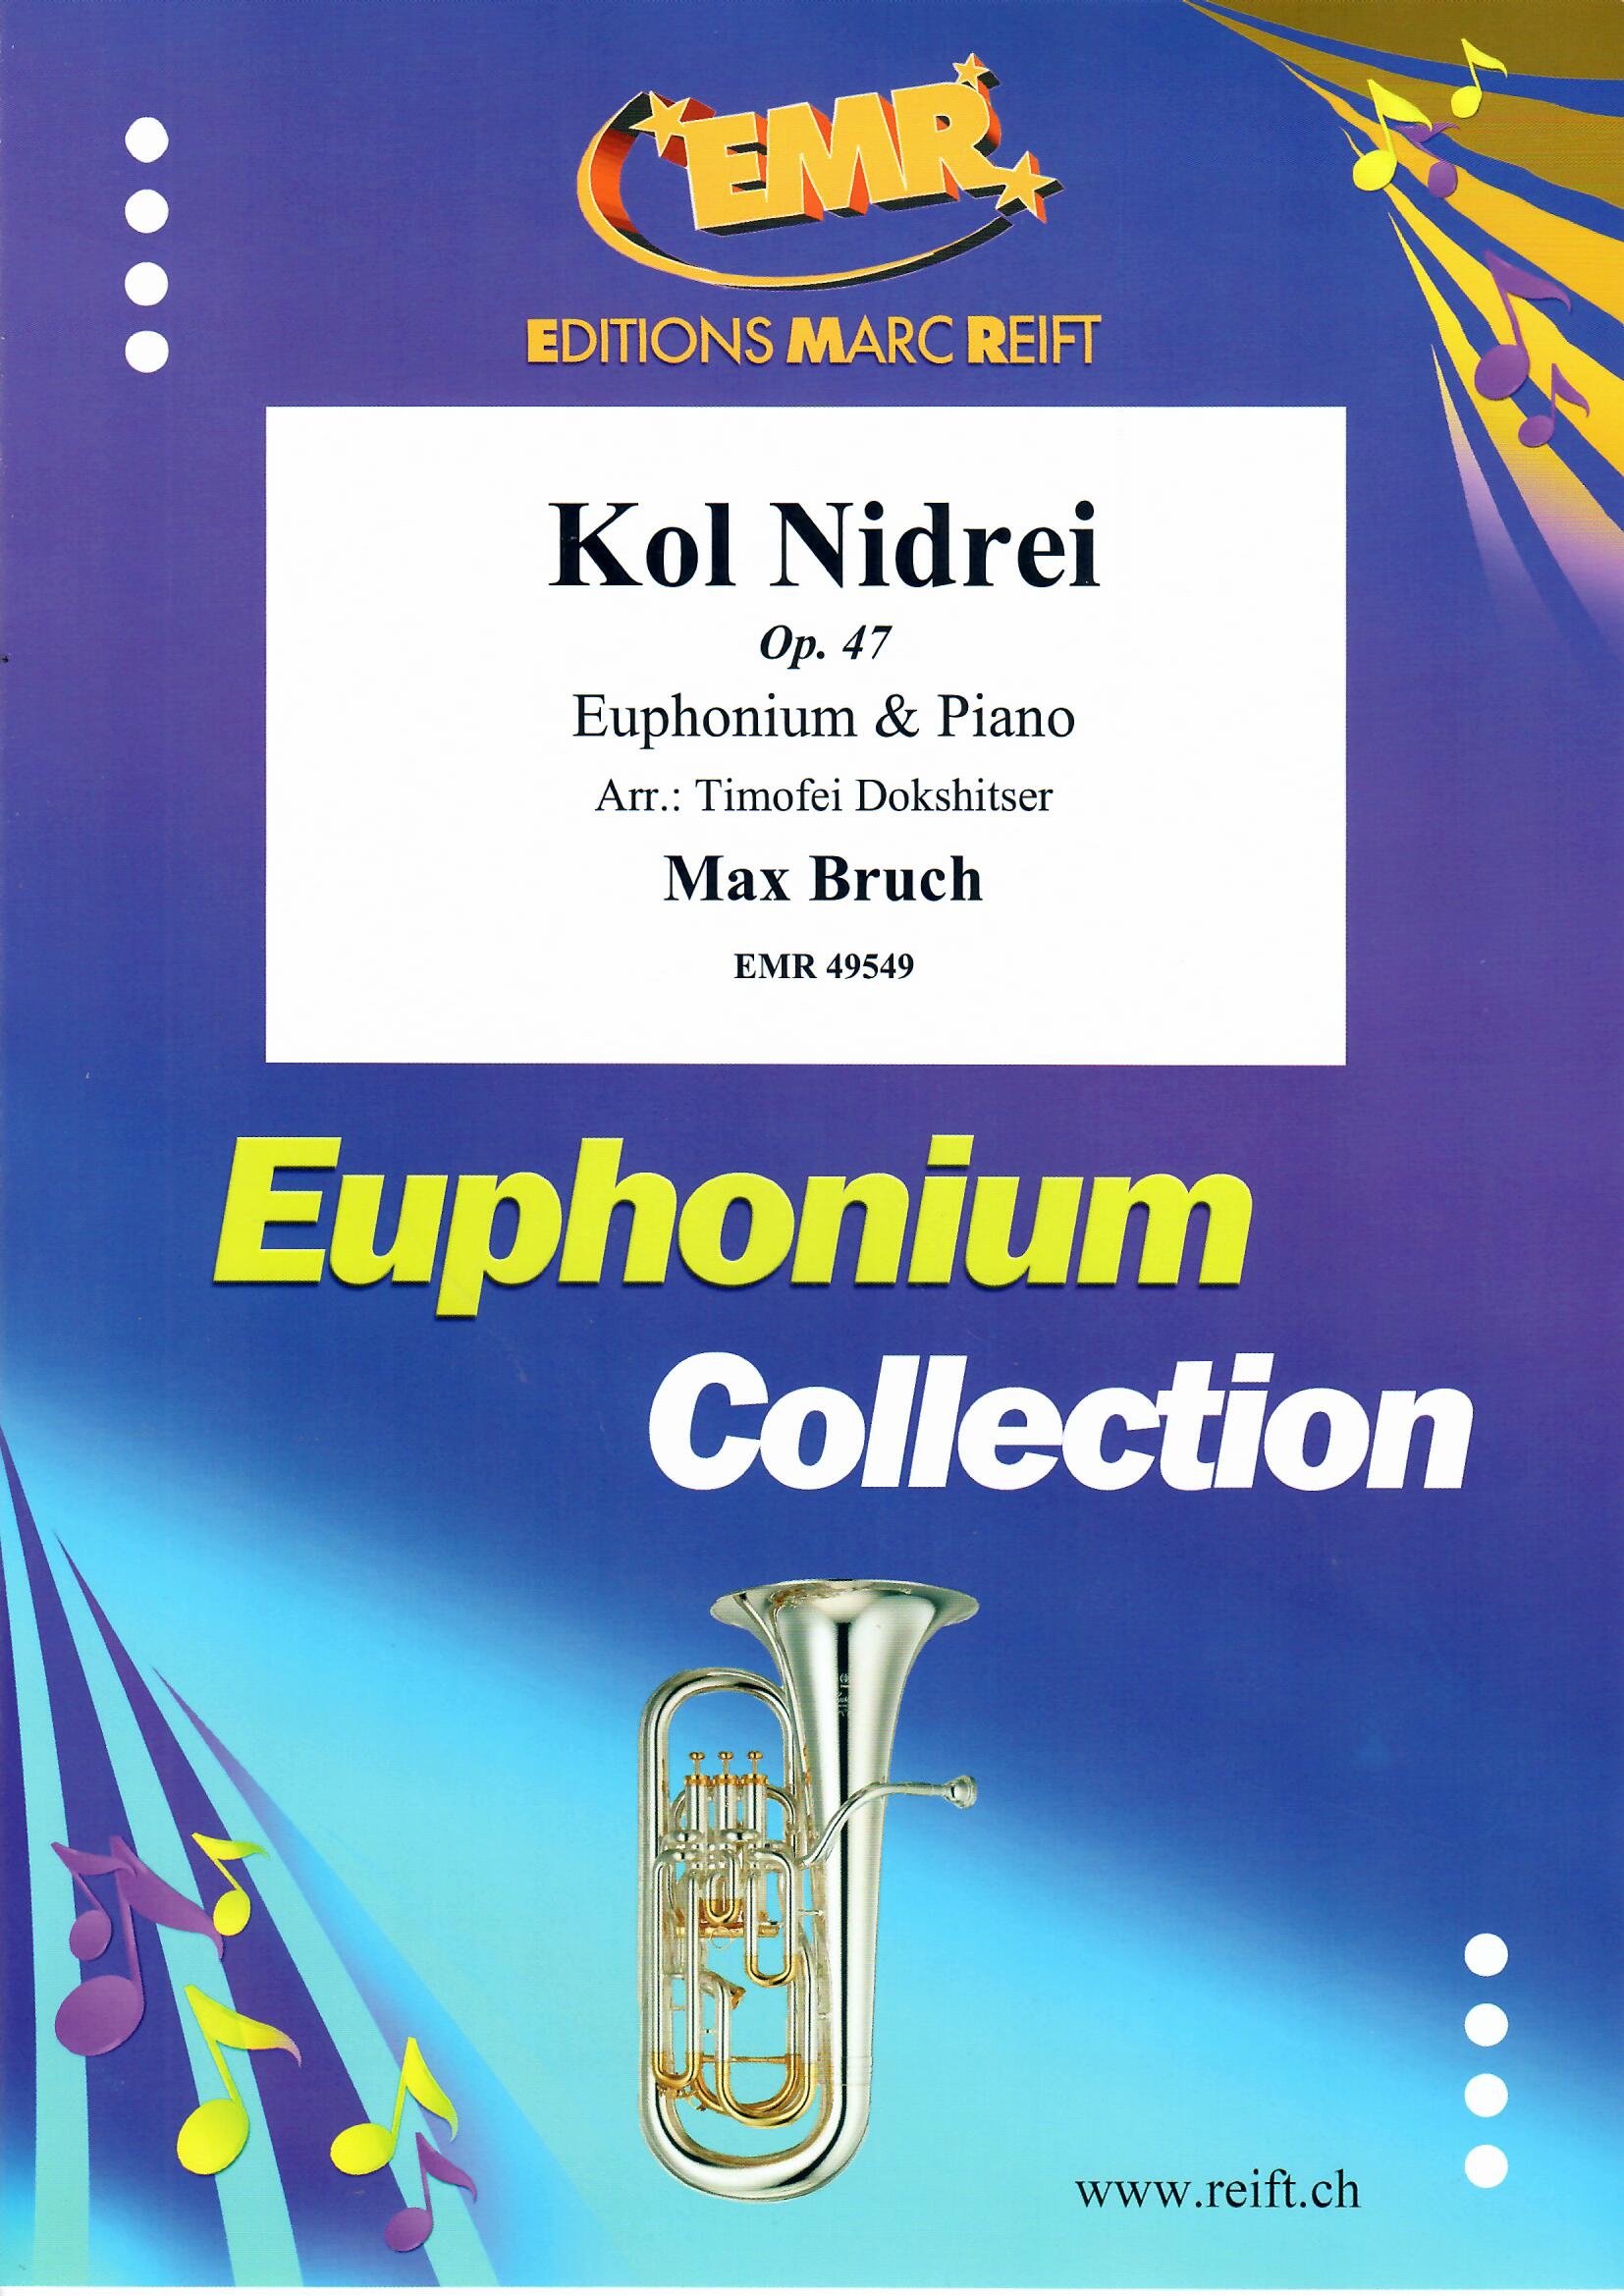 KOL NIDREI - Euphonium & Piano